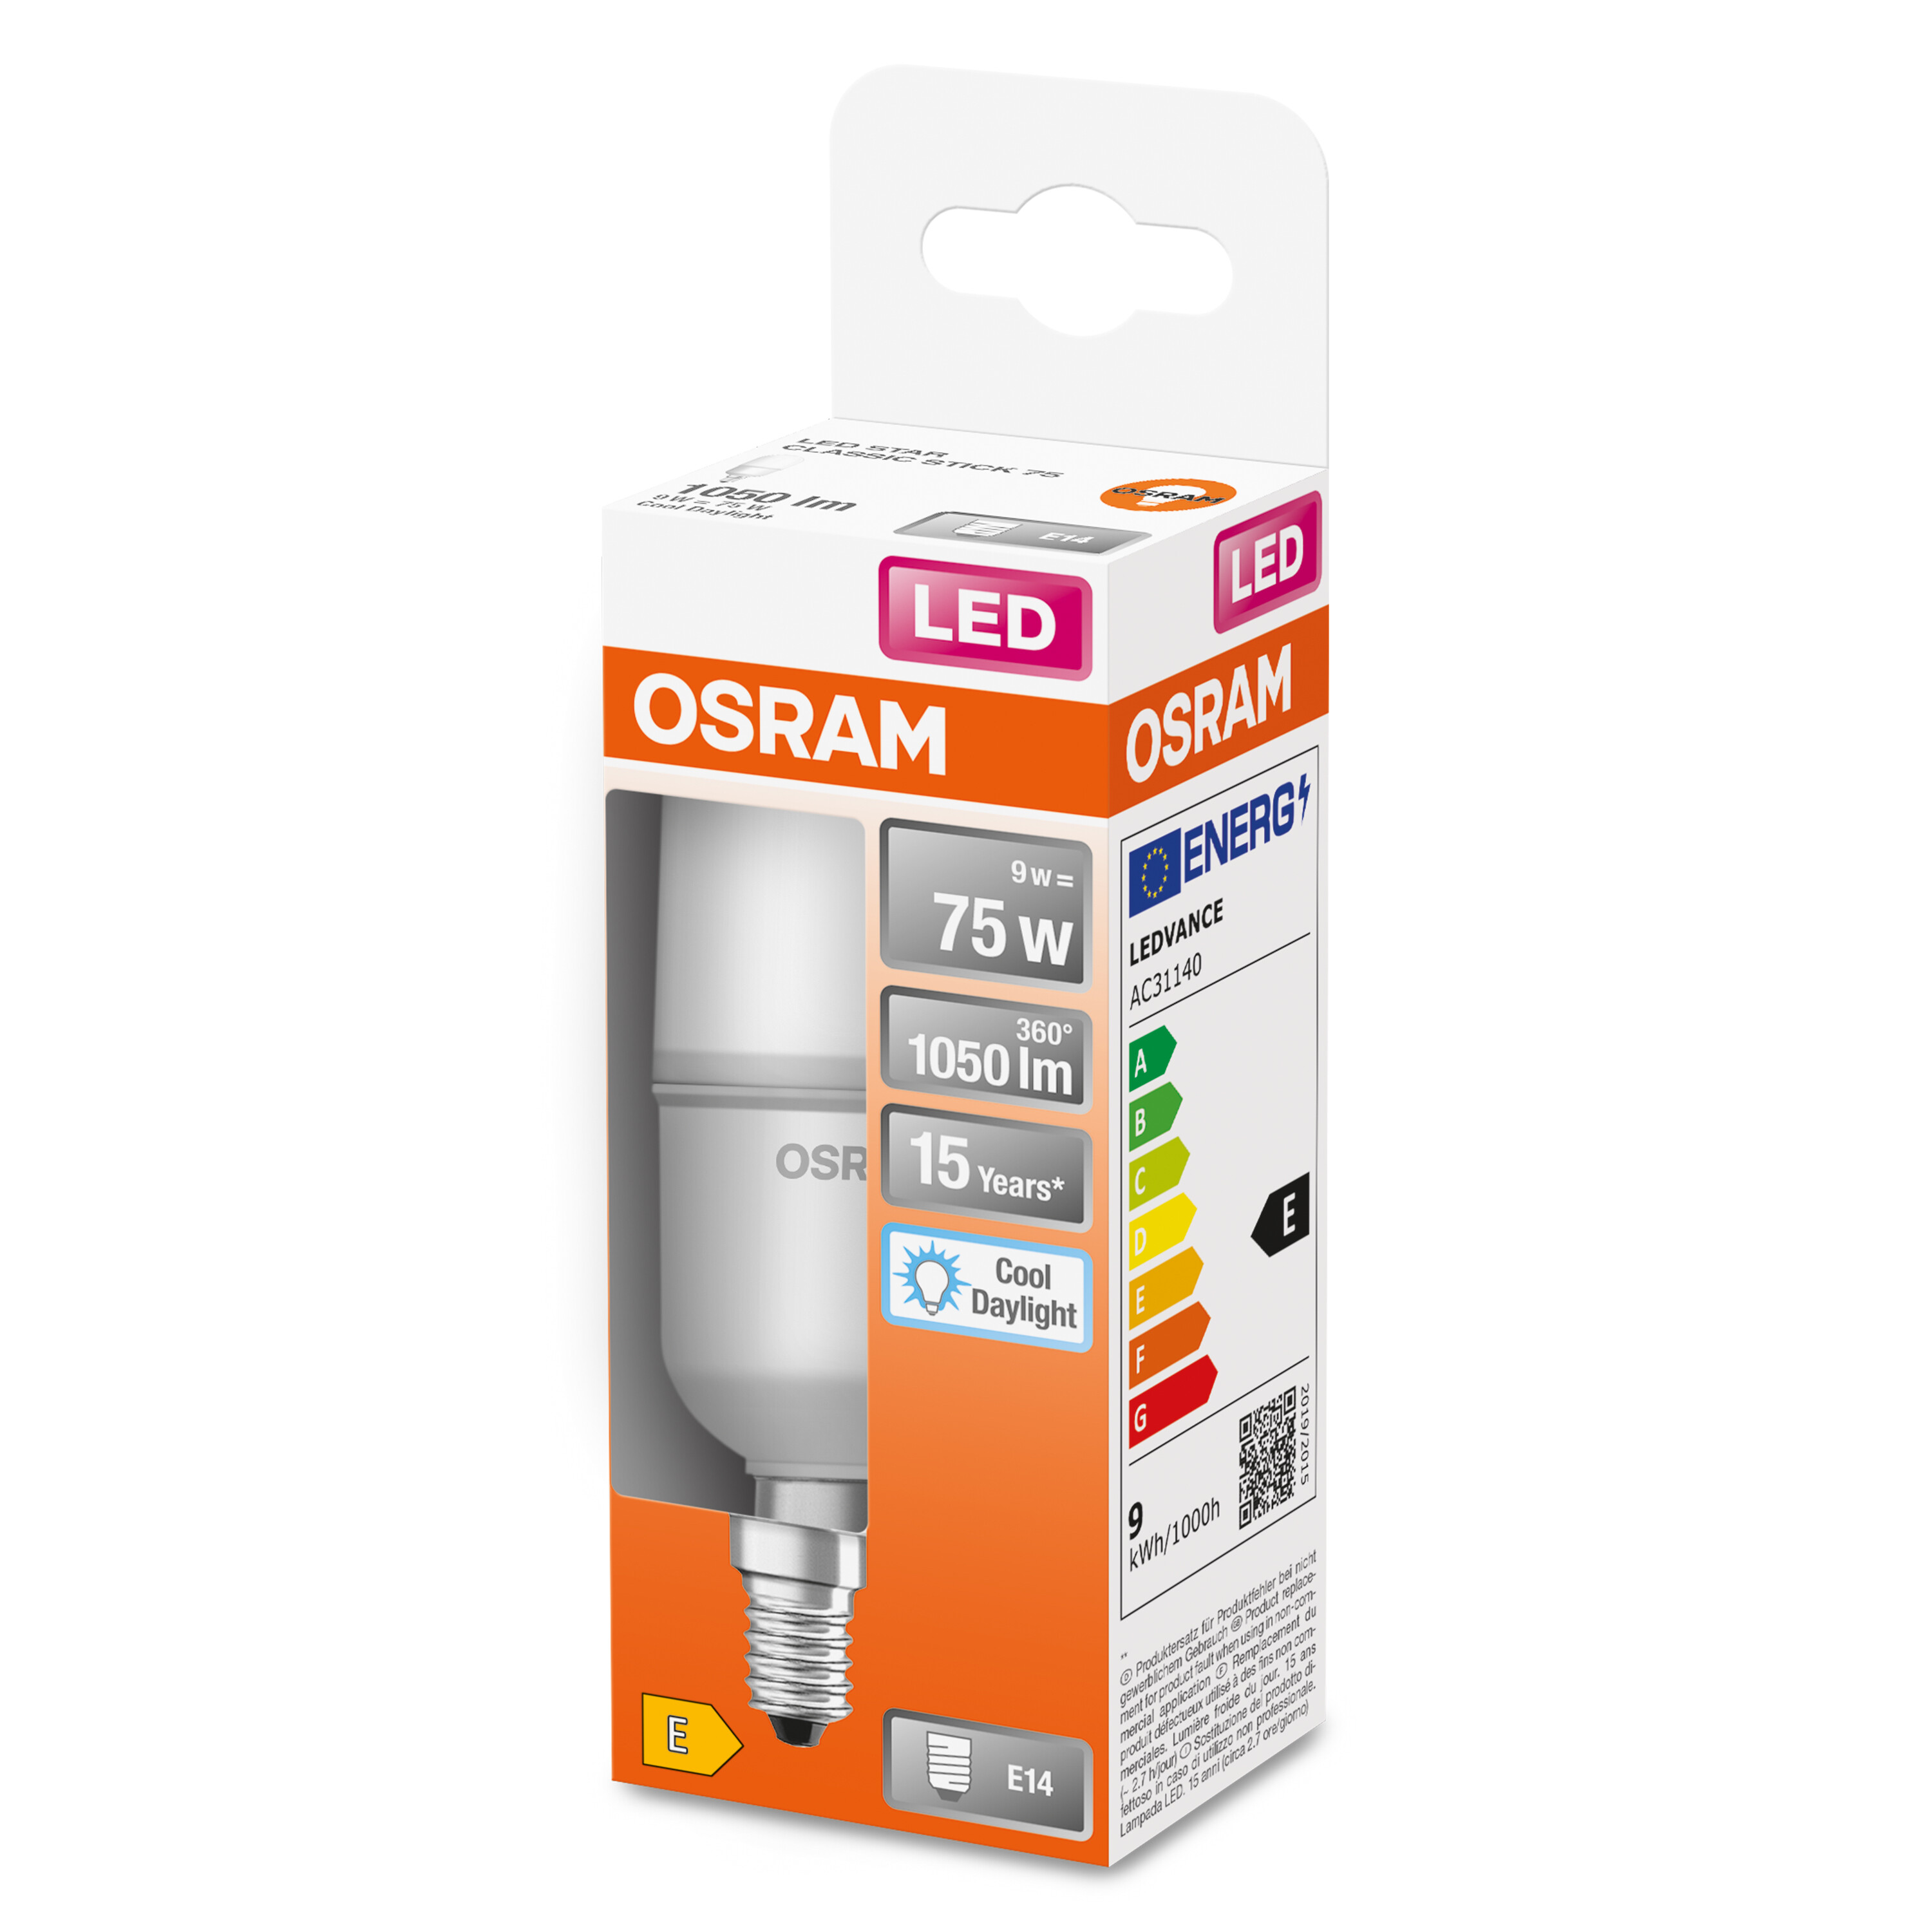 STICK OSRAM  LED 1050 LED Lampe STAR lumen Kaltweiß